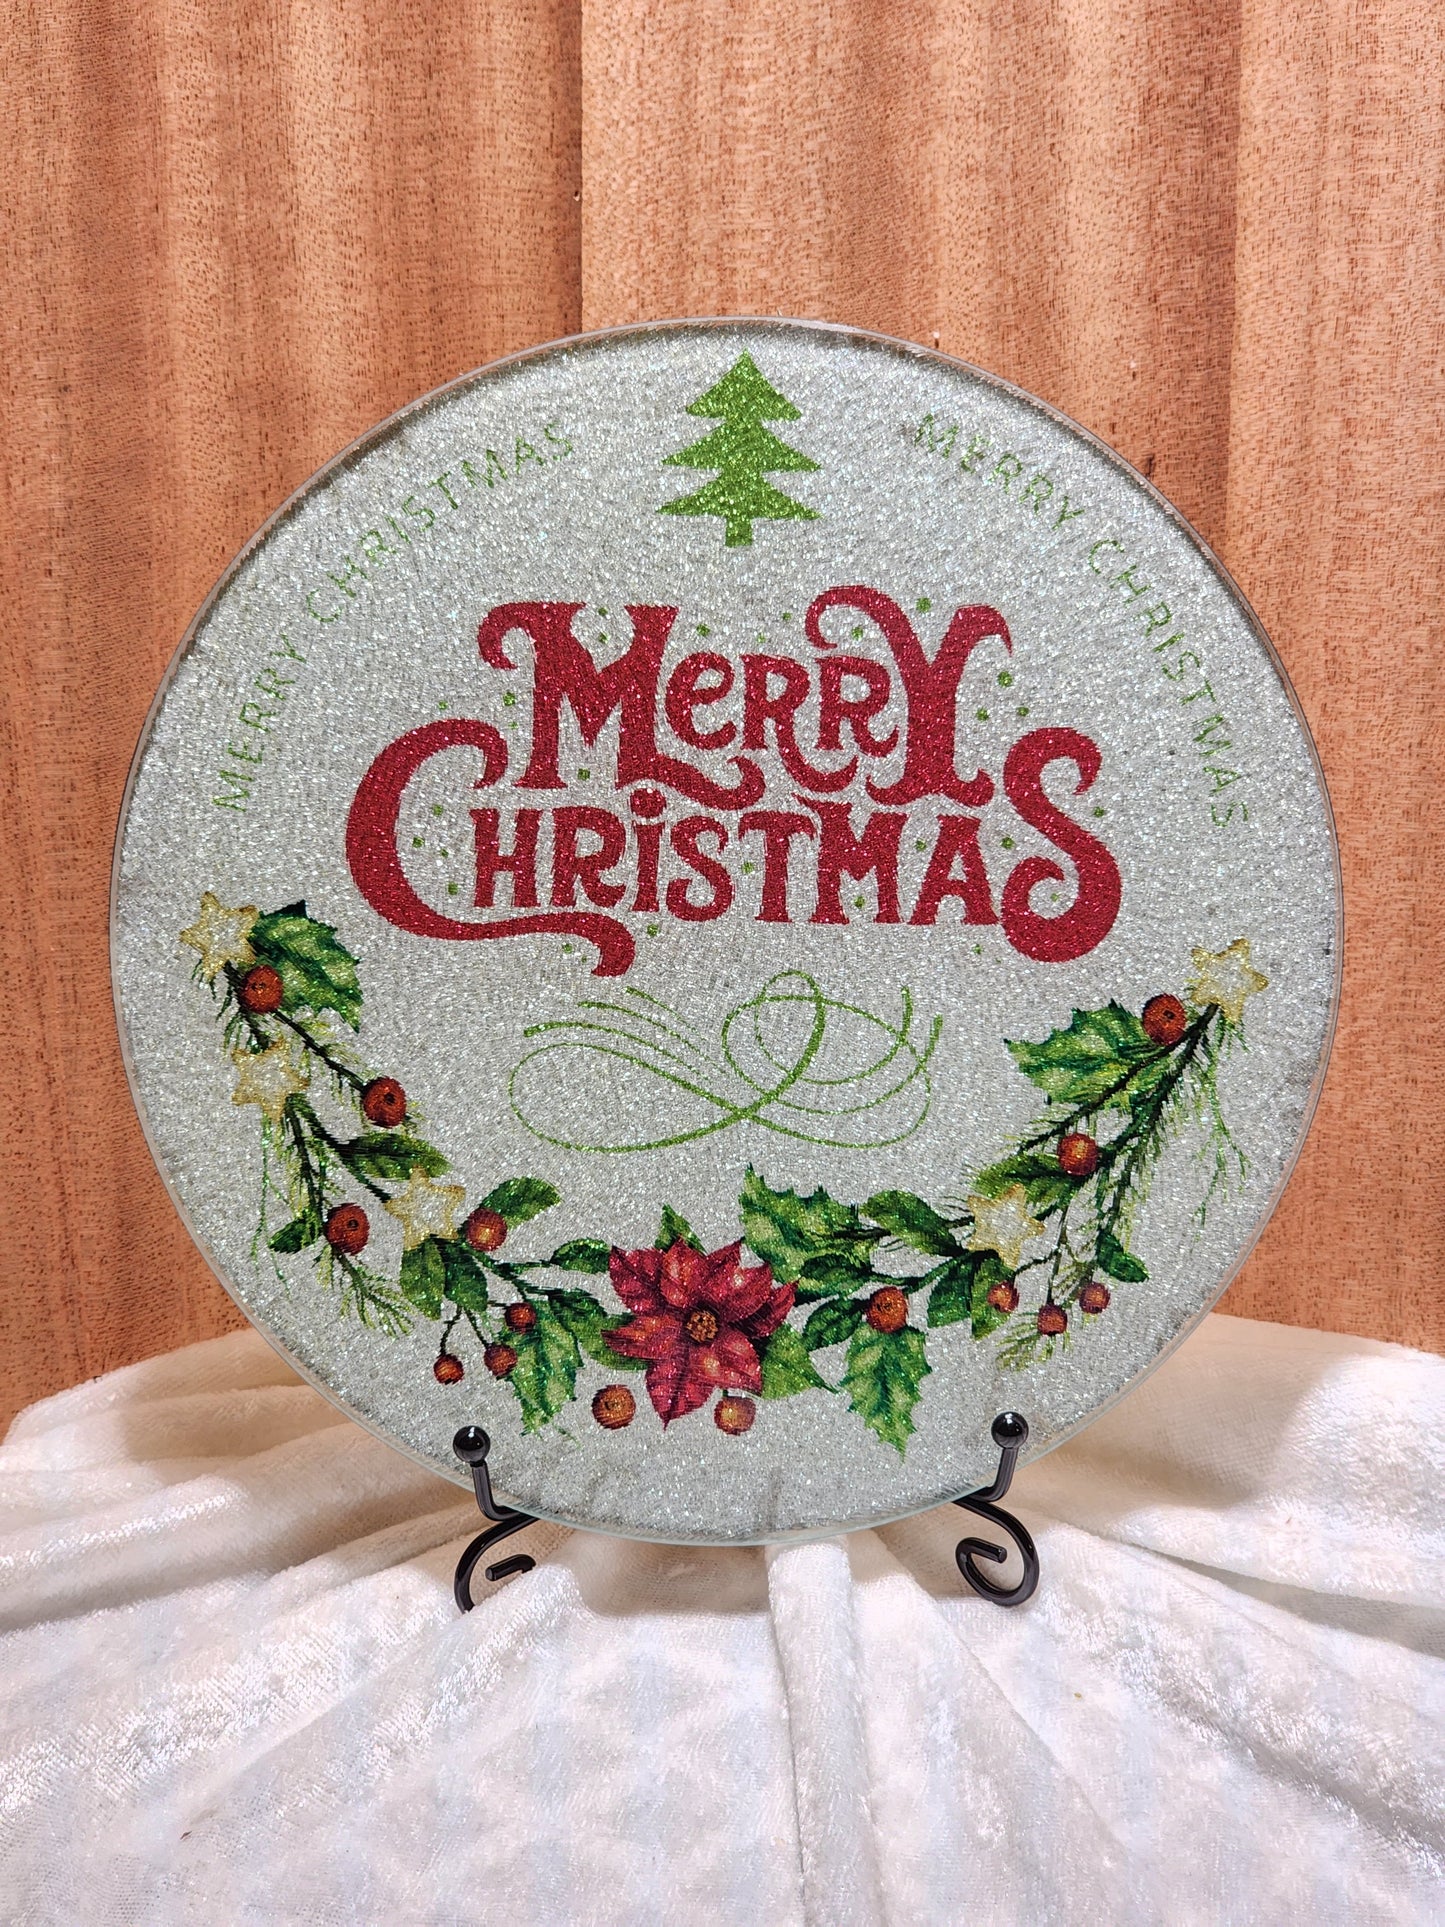 Merry Christmas glass cutting board